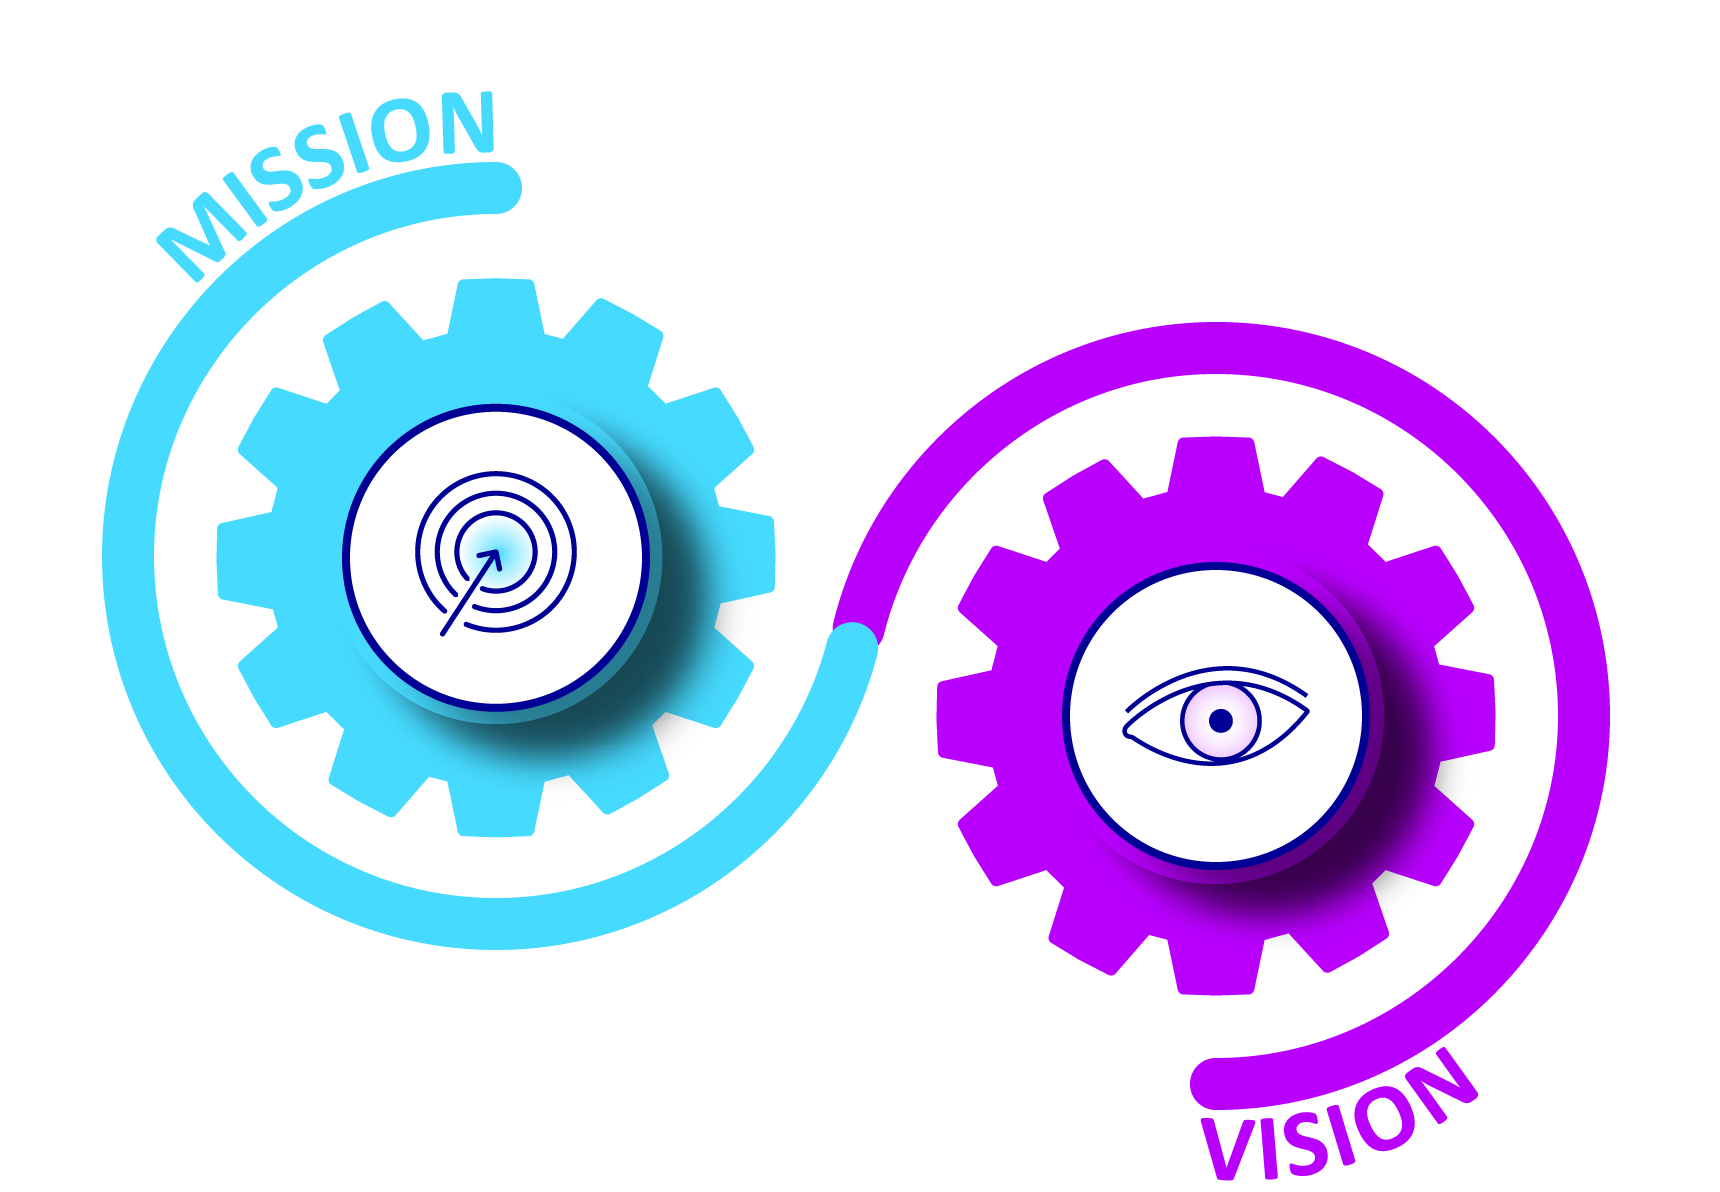 Mission Vision Gaia-X